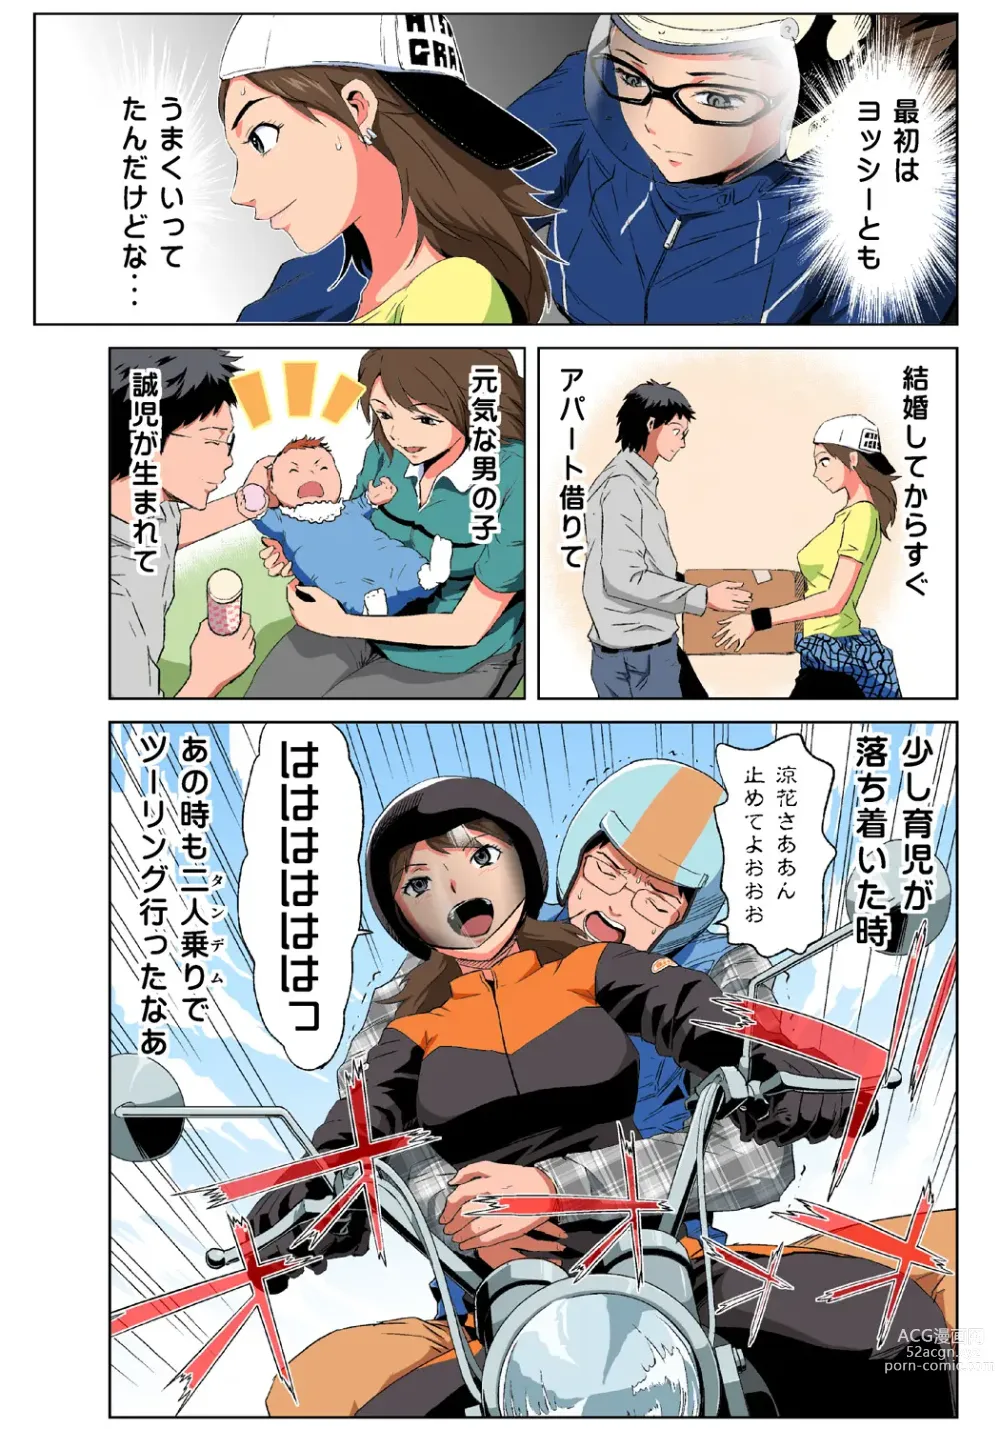 Page 5 of manga HiME-Mania Vol. 39